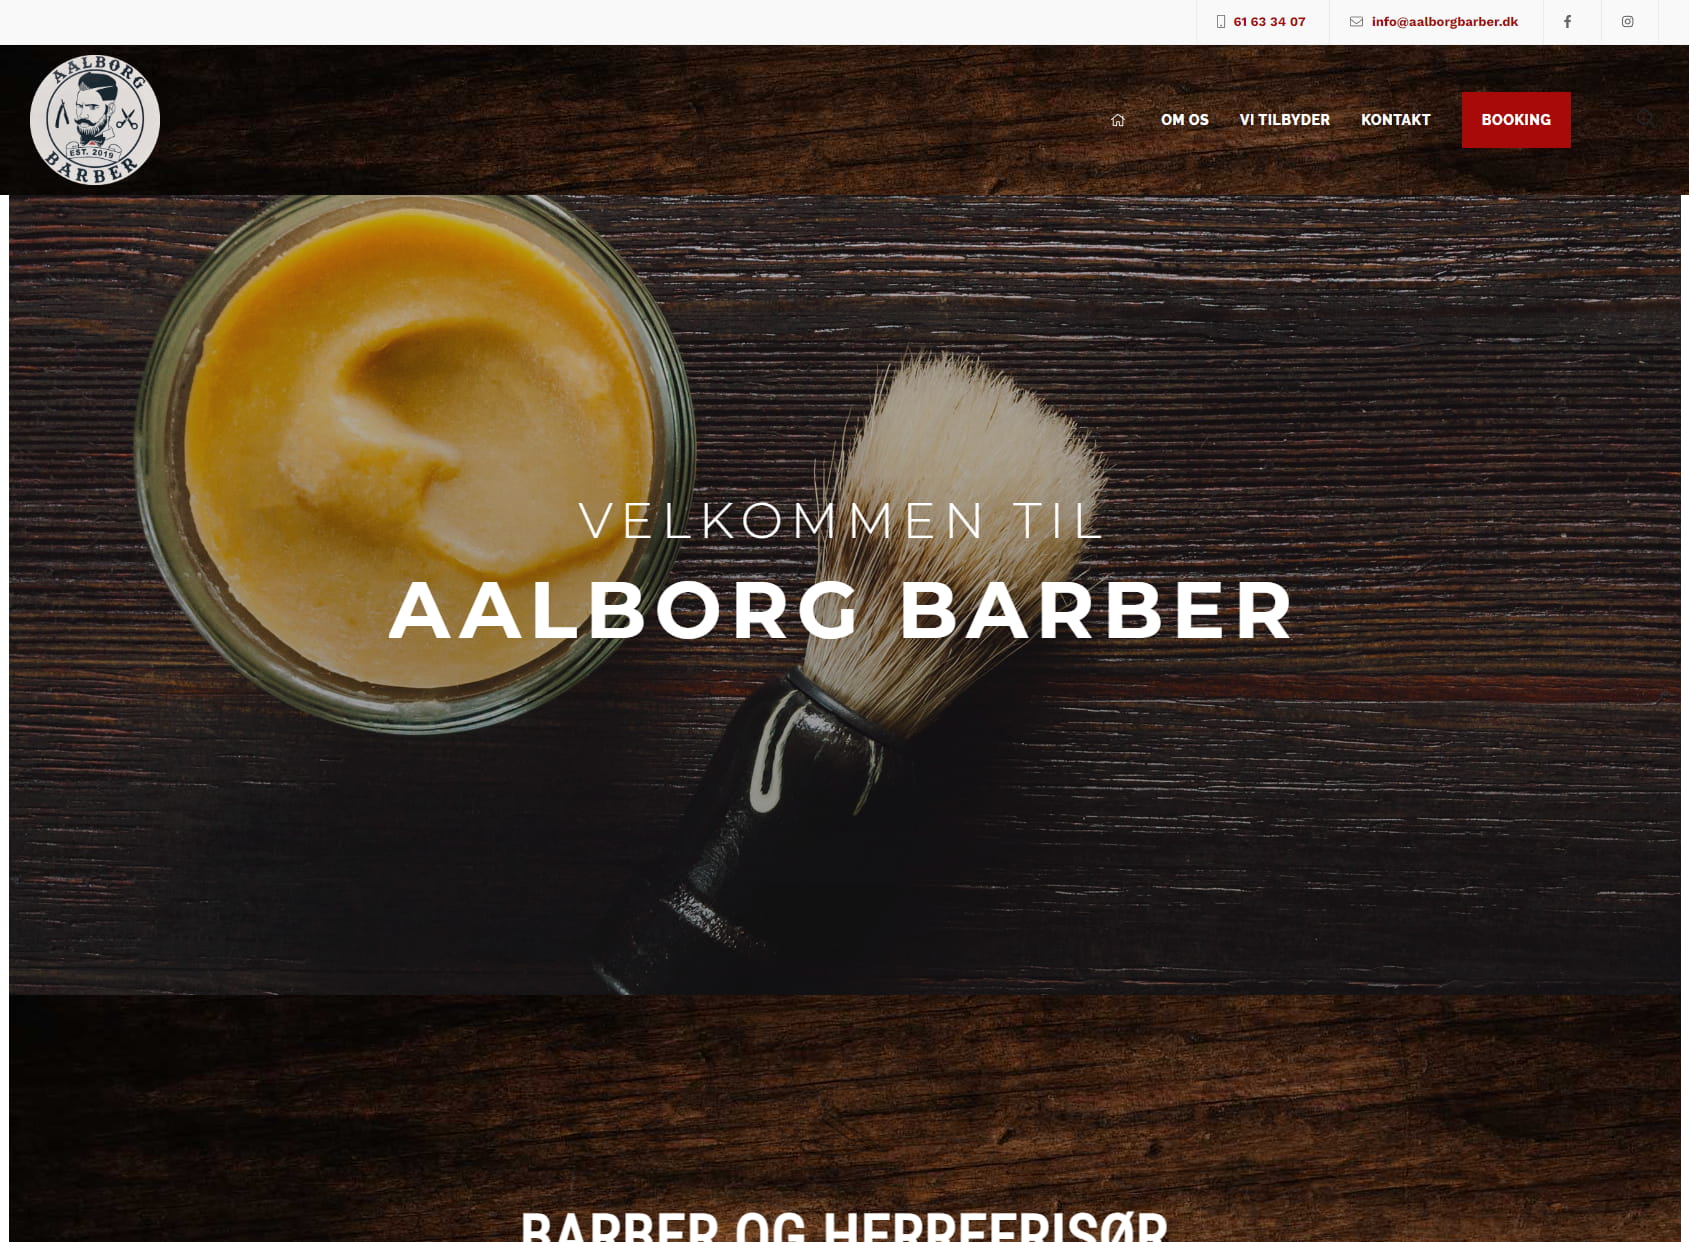 Aalborg Barber